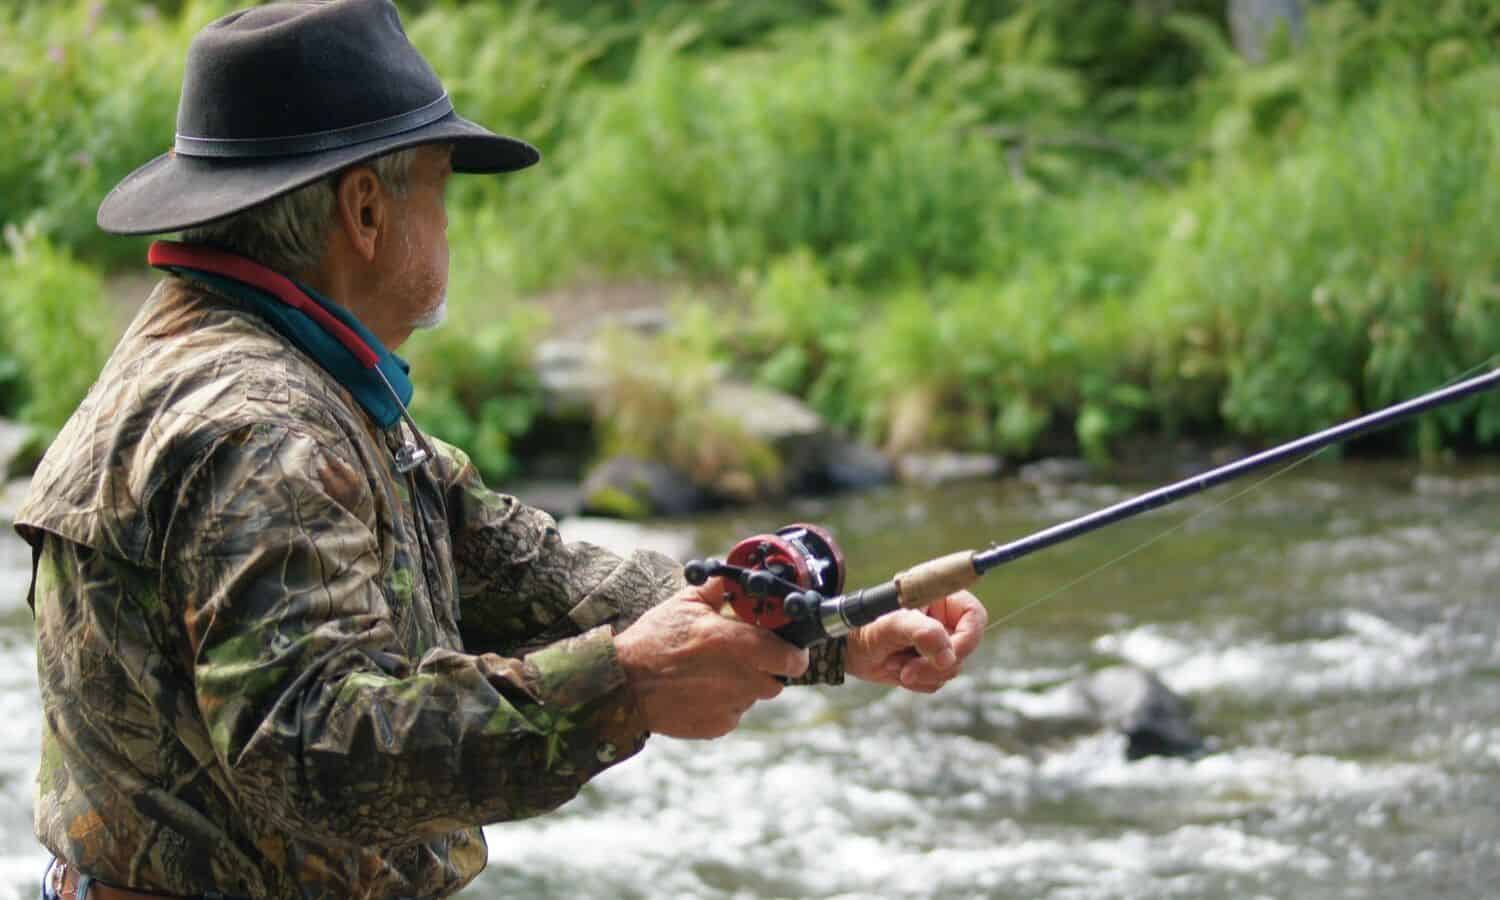 Redneck Fishing Guide: 47 Weird Fishing Tips & Tricks